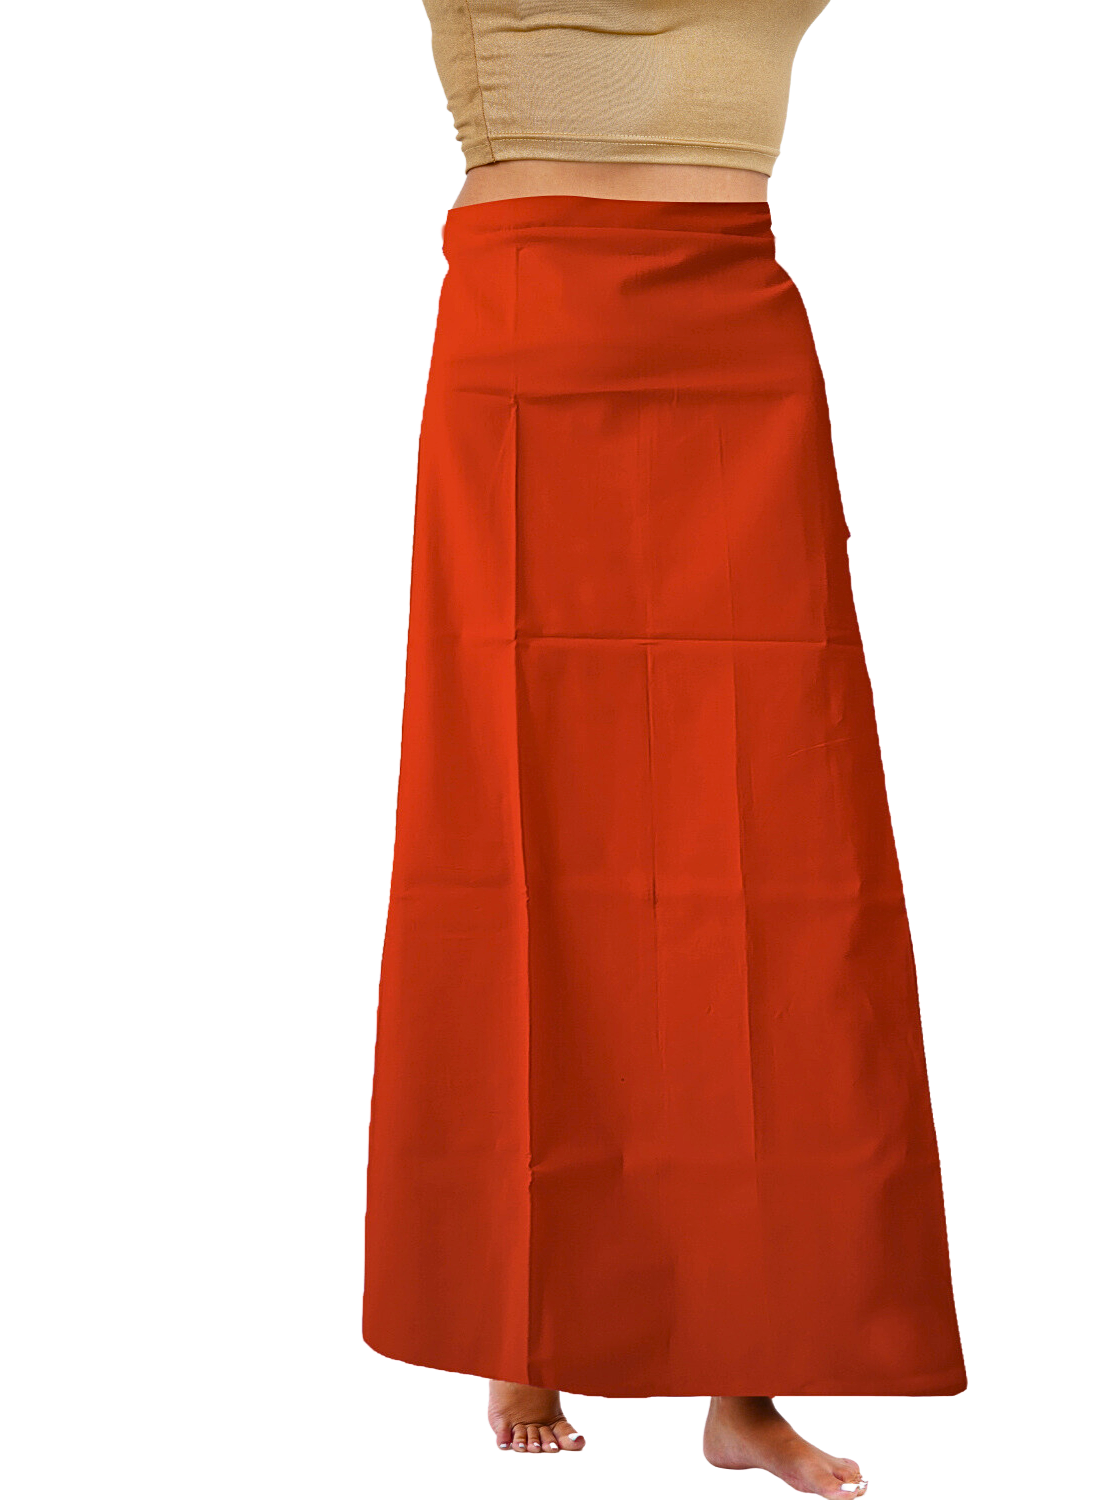 MANGAI Premium Embroidery Superior Cotton Petticoats - 8 Part Multiple Color's Petticoats